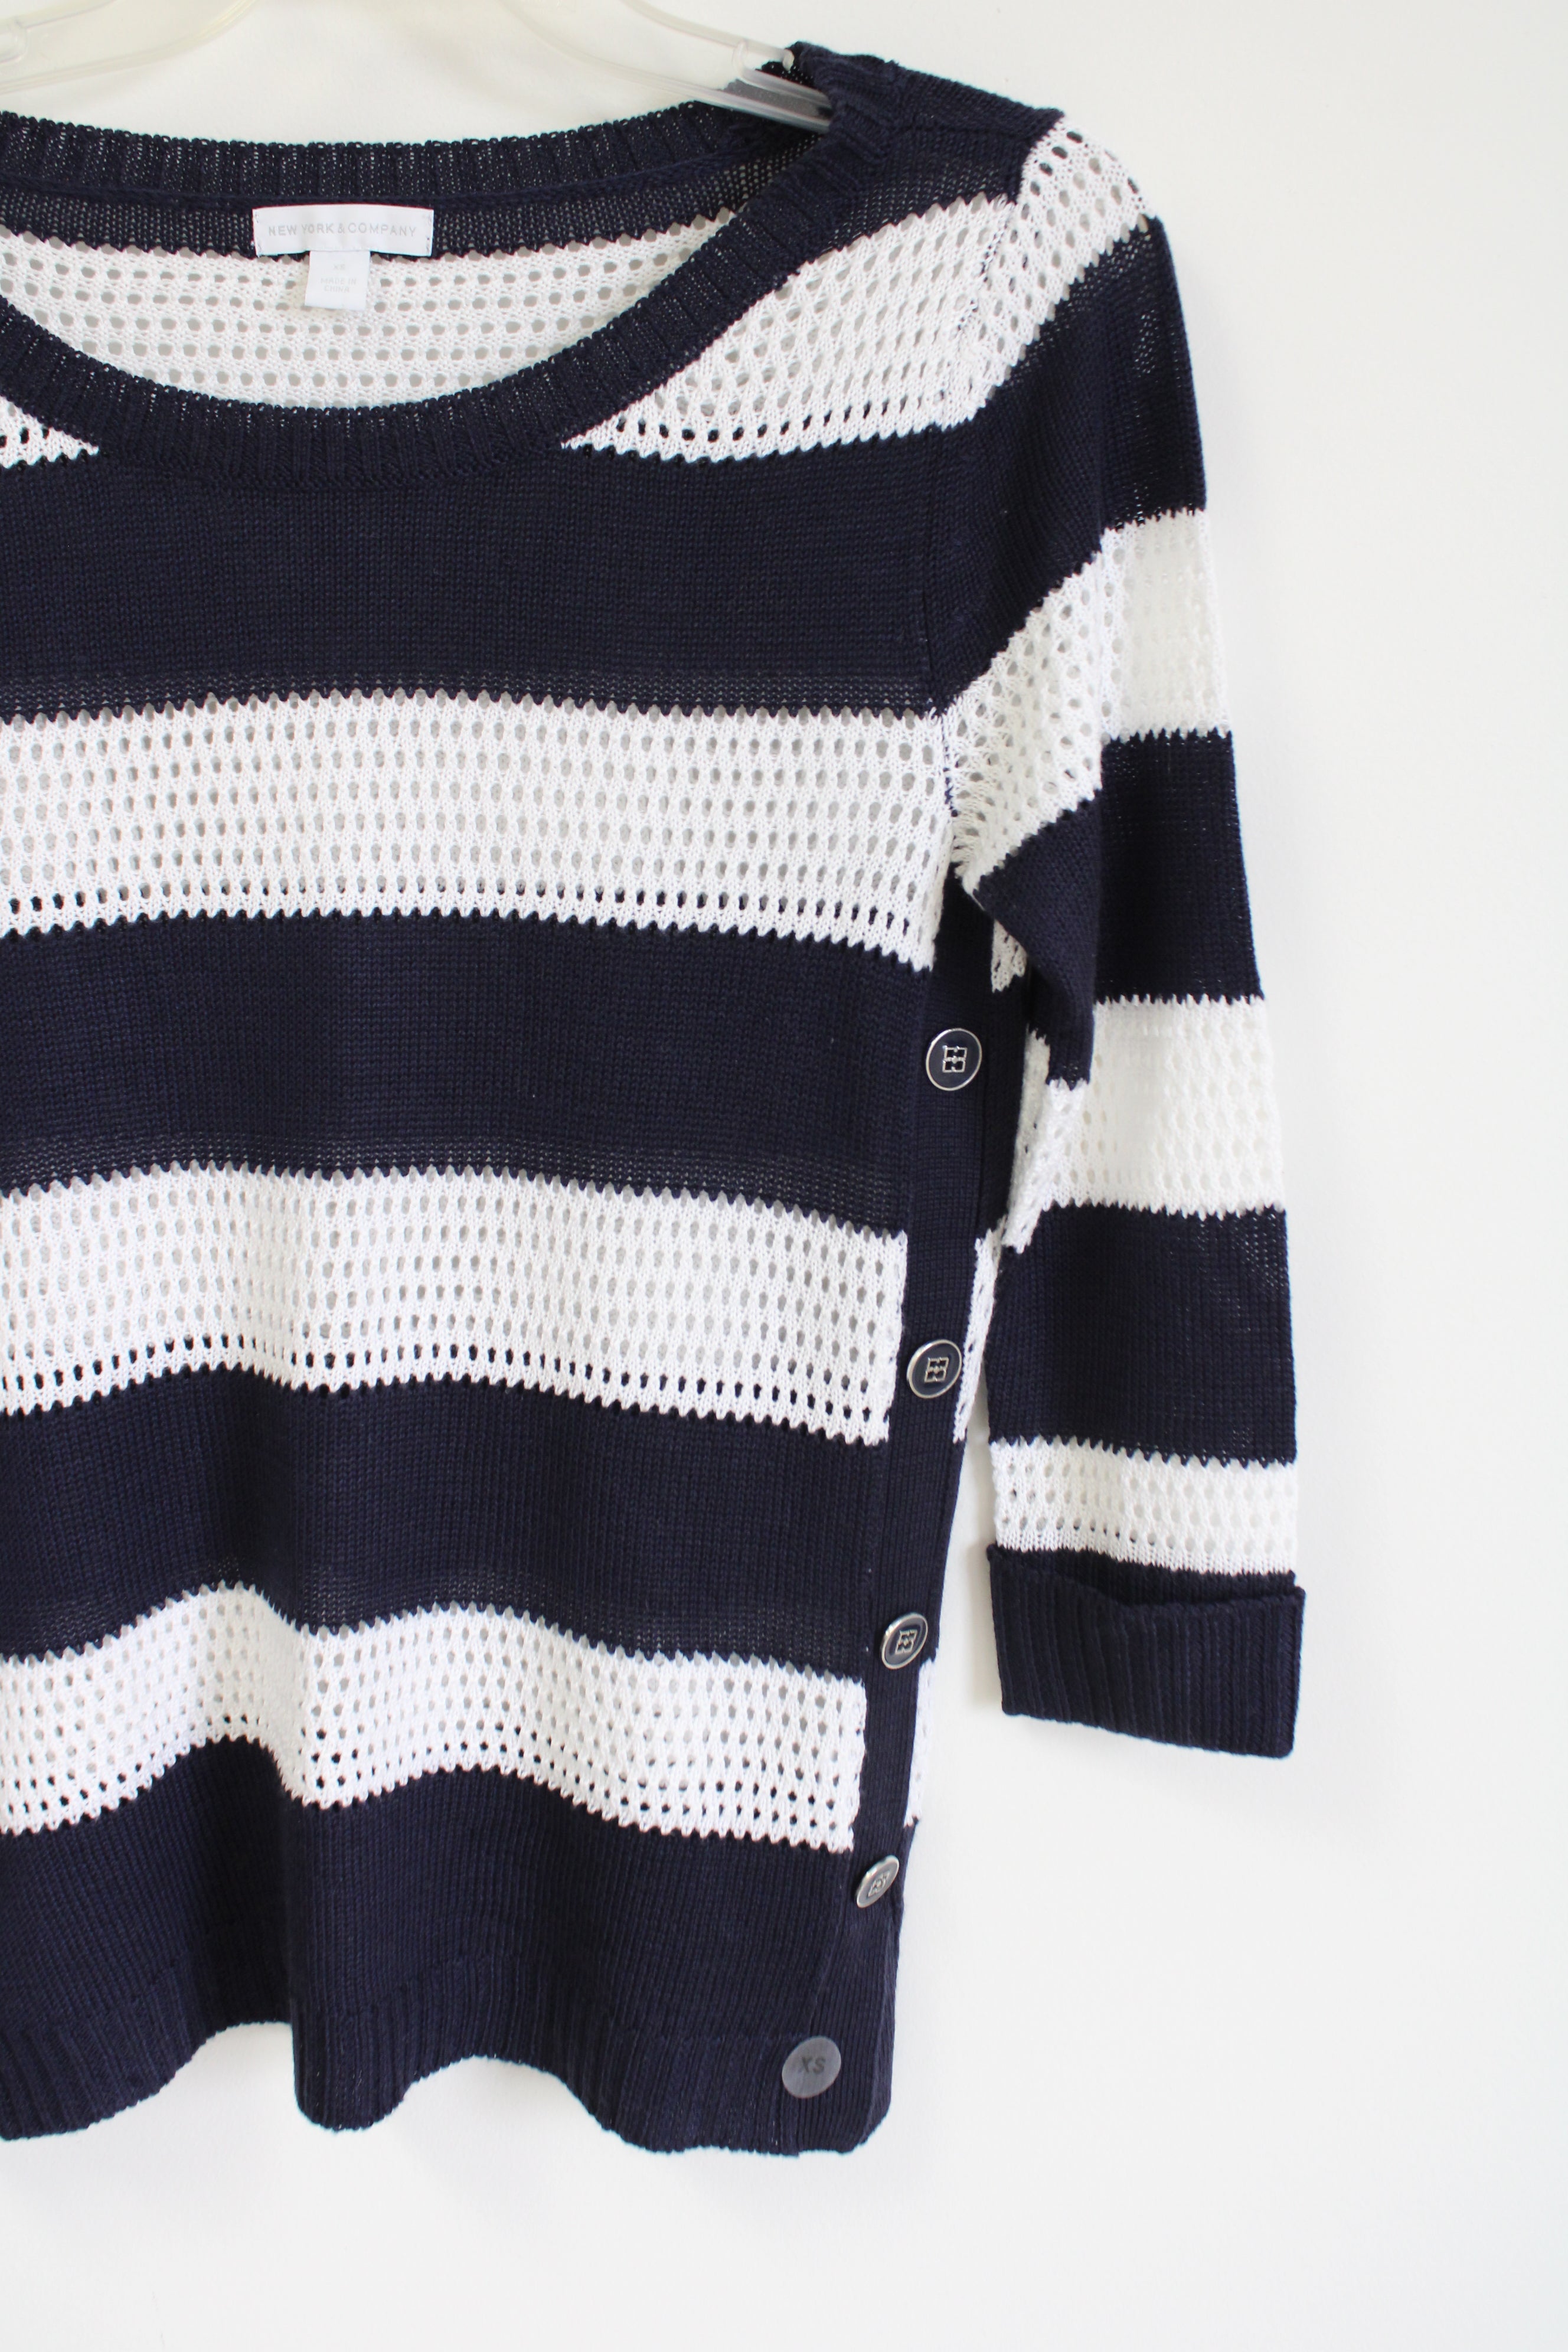 New York & Co. Navy Blue White Knit Lightweight Sweater | XS